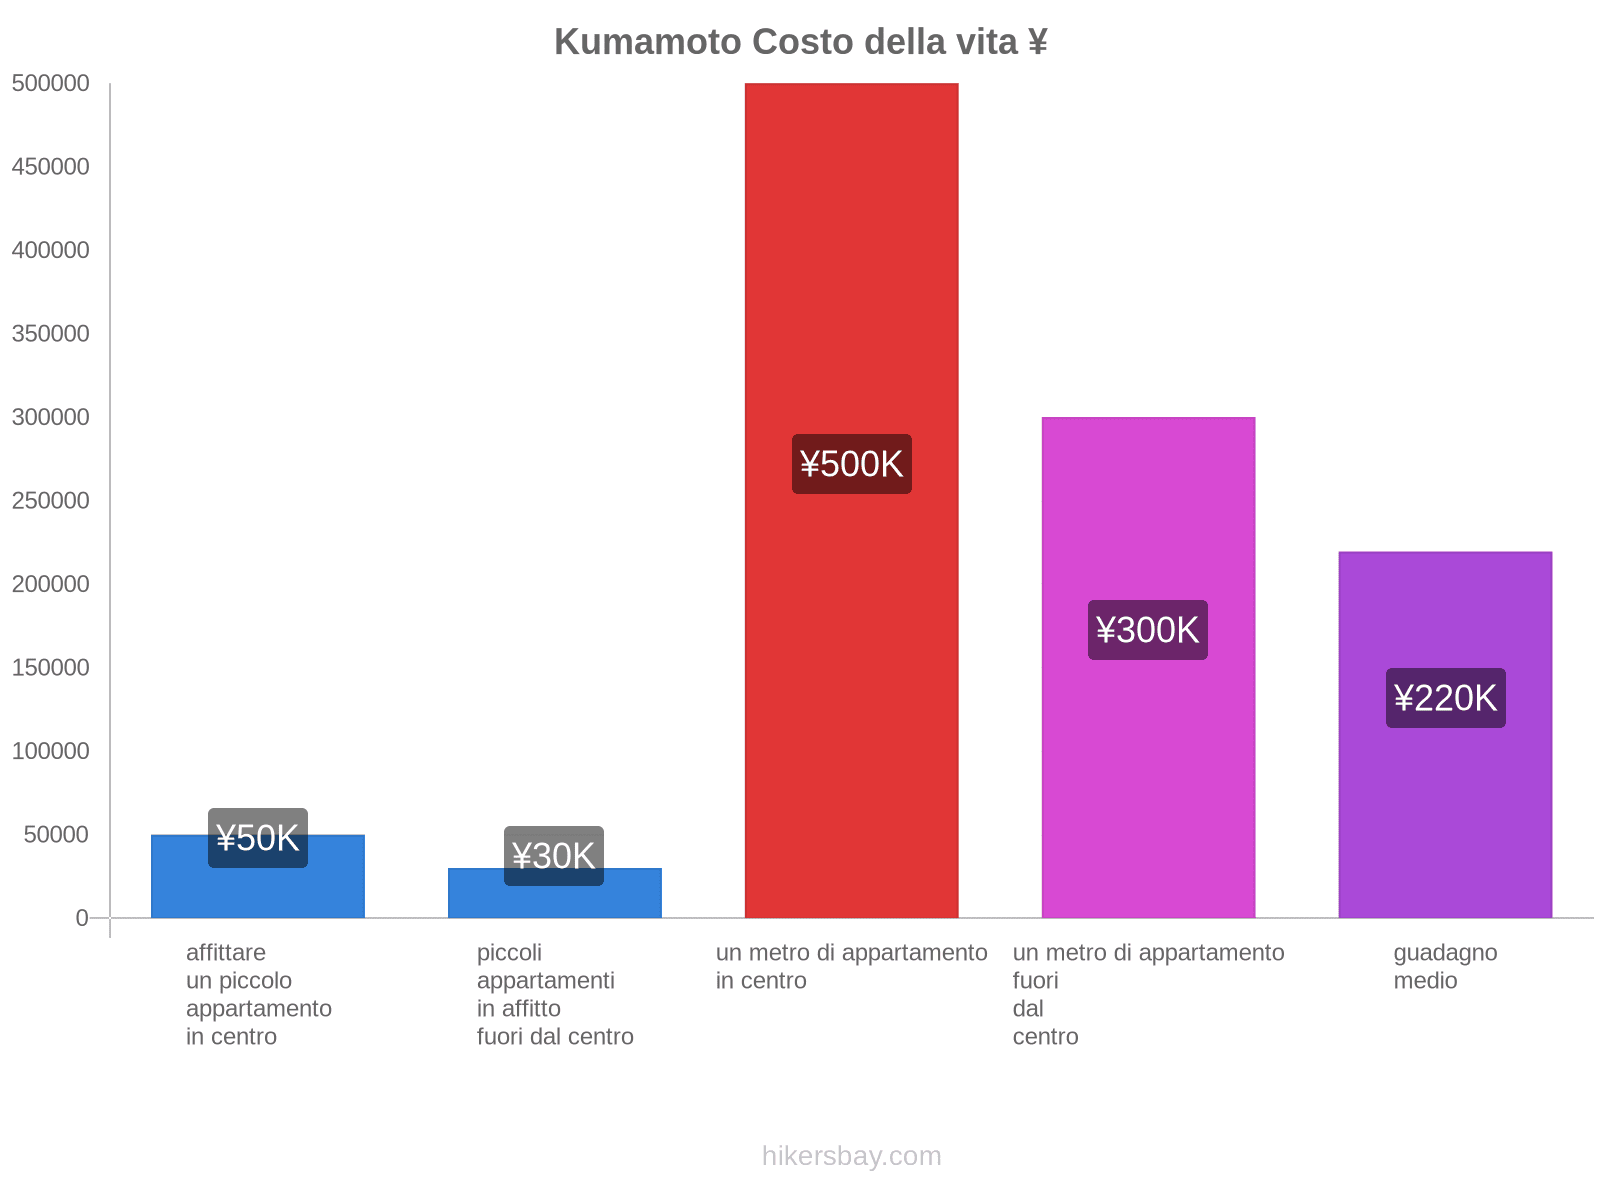 Kumamoto costo della vita hikersbay.com